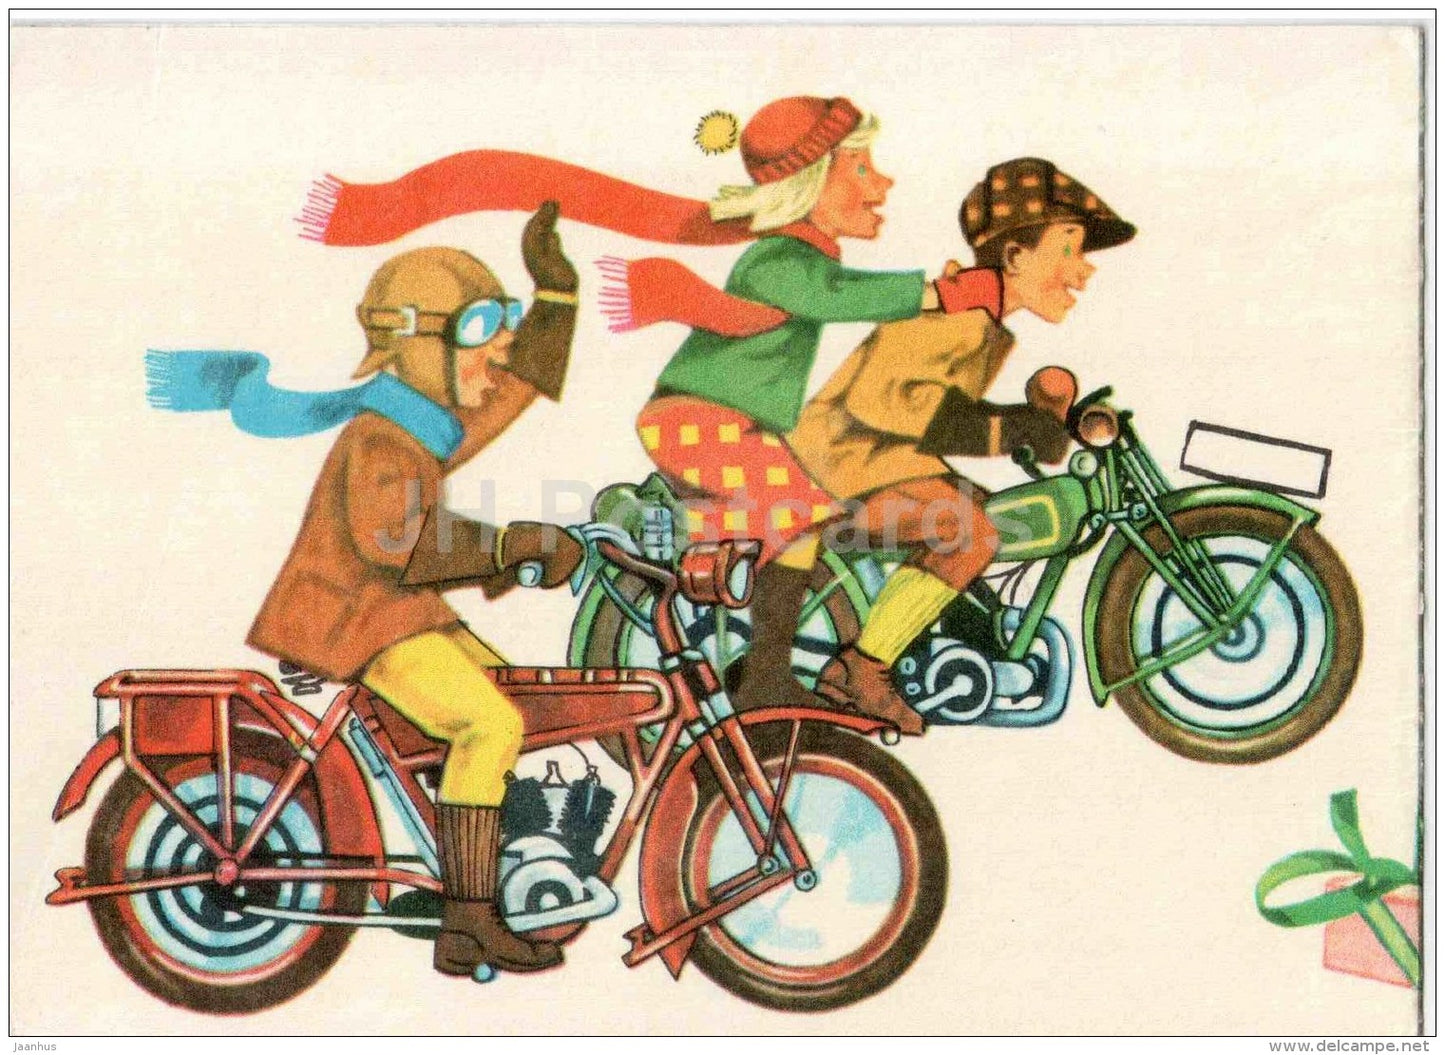 New Year Greeting Card by V. Tõnisson - old car - Santa Claus - motorbike - 1976 - Estonia USSR - used - JH Postcards